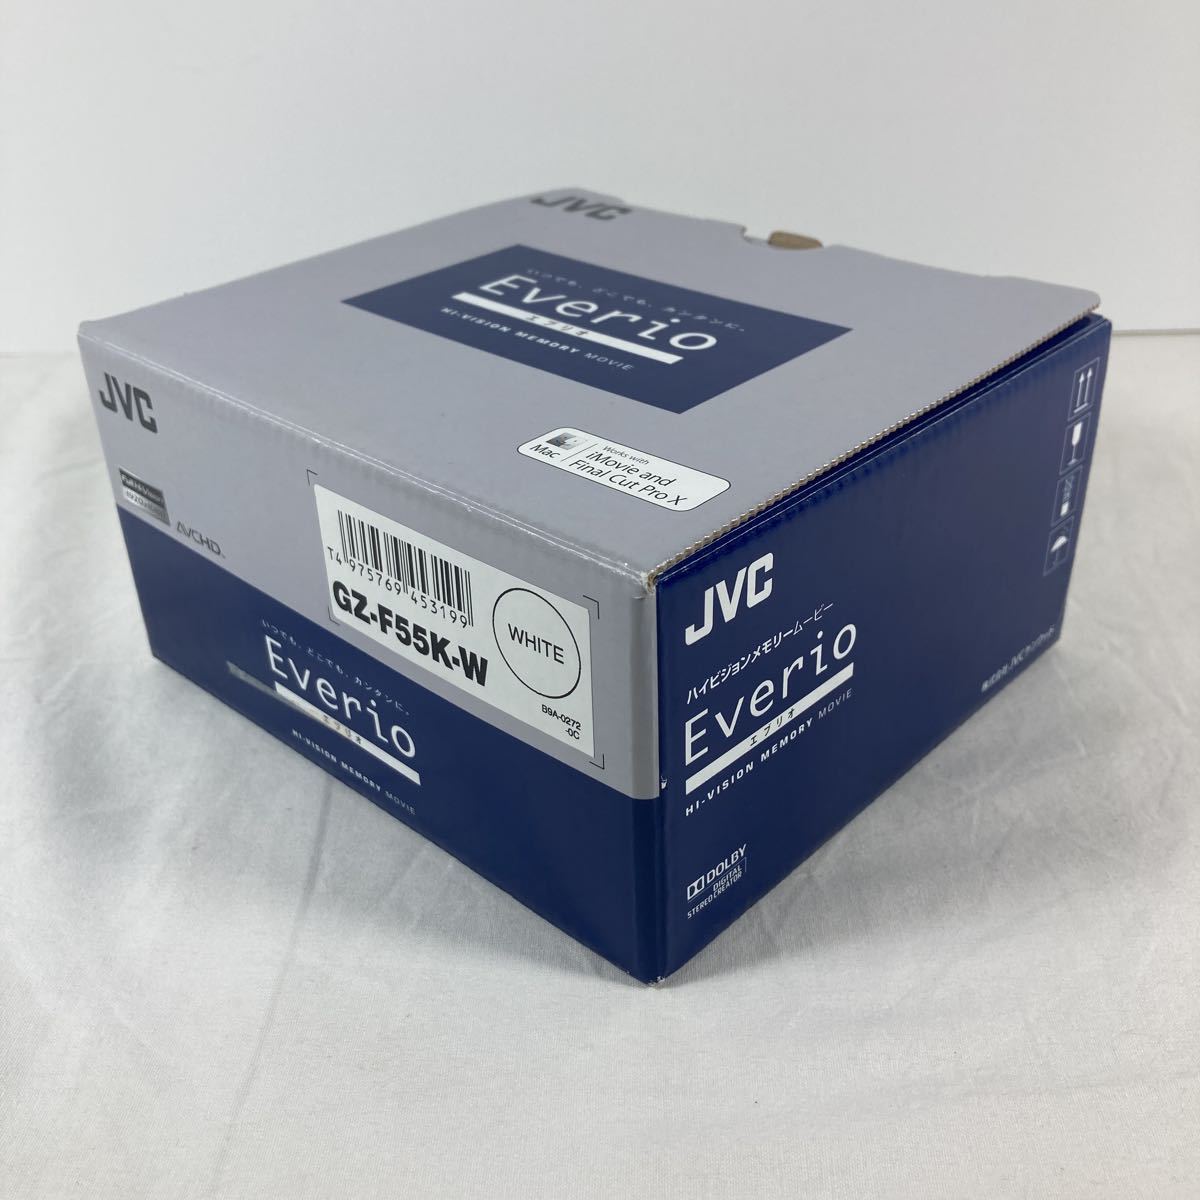 JVC Everio GZ-F55K-W Every o видео камера Hi-Vision 1920x1080 2018 год 